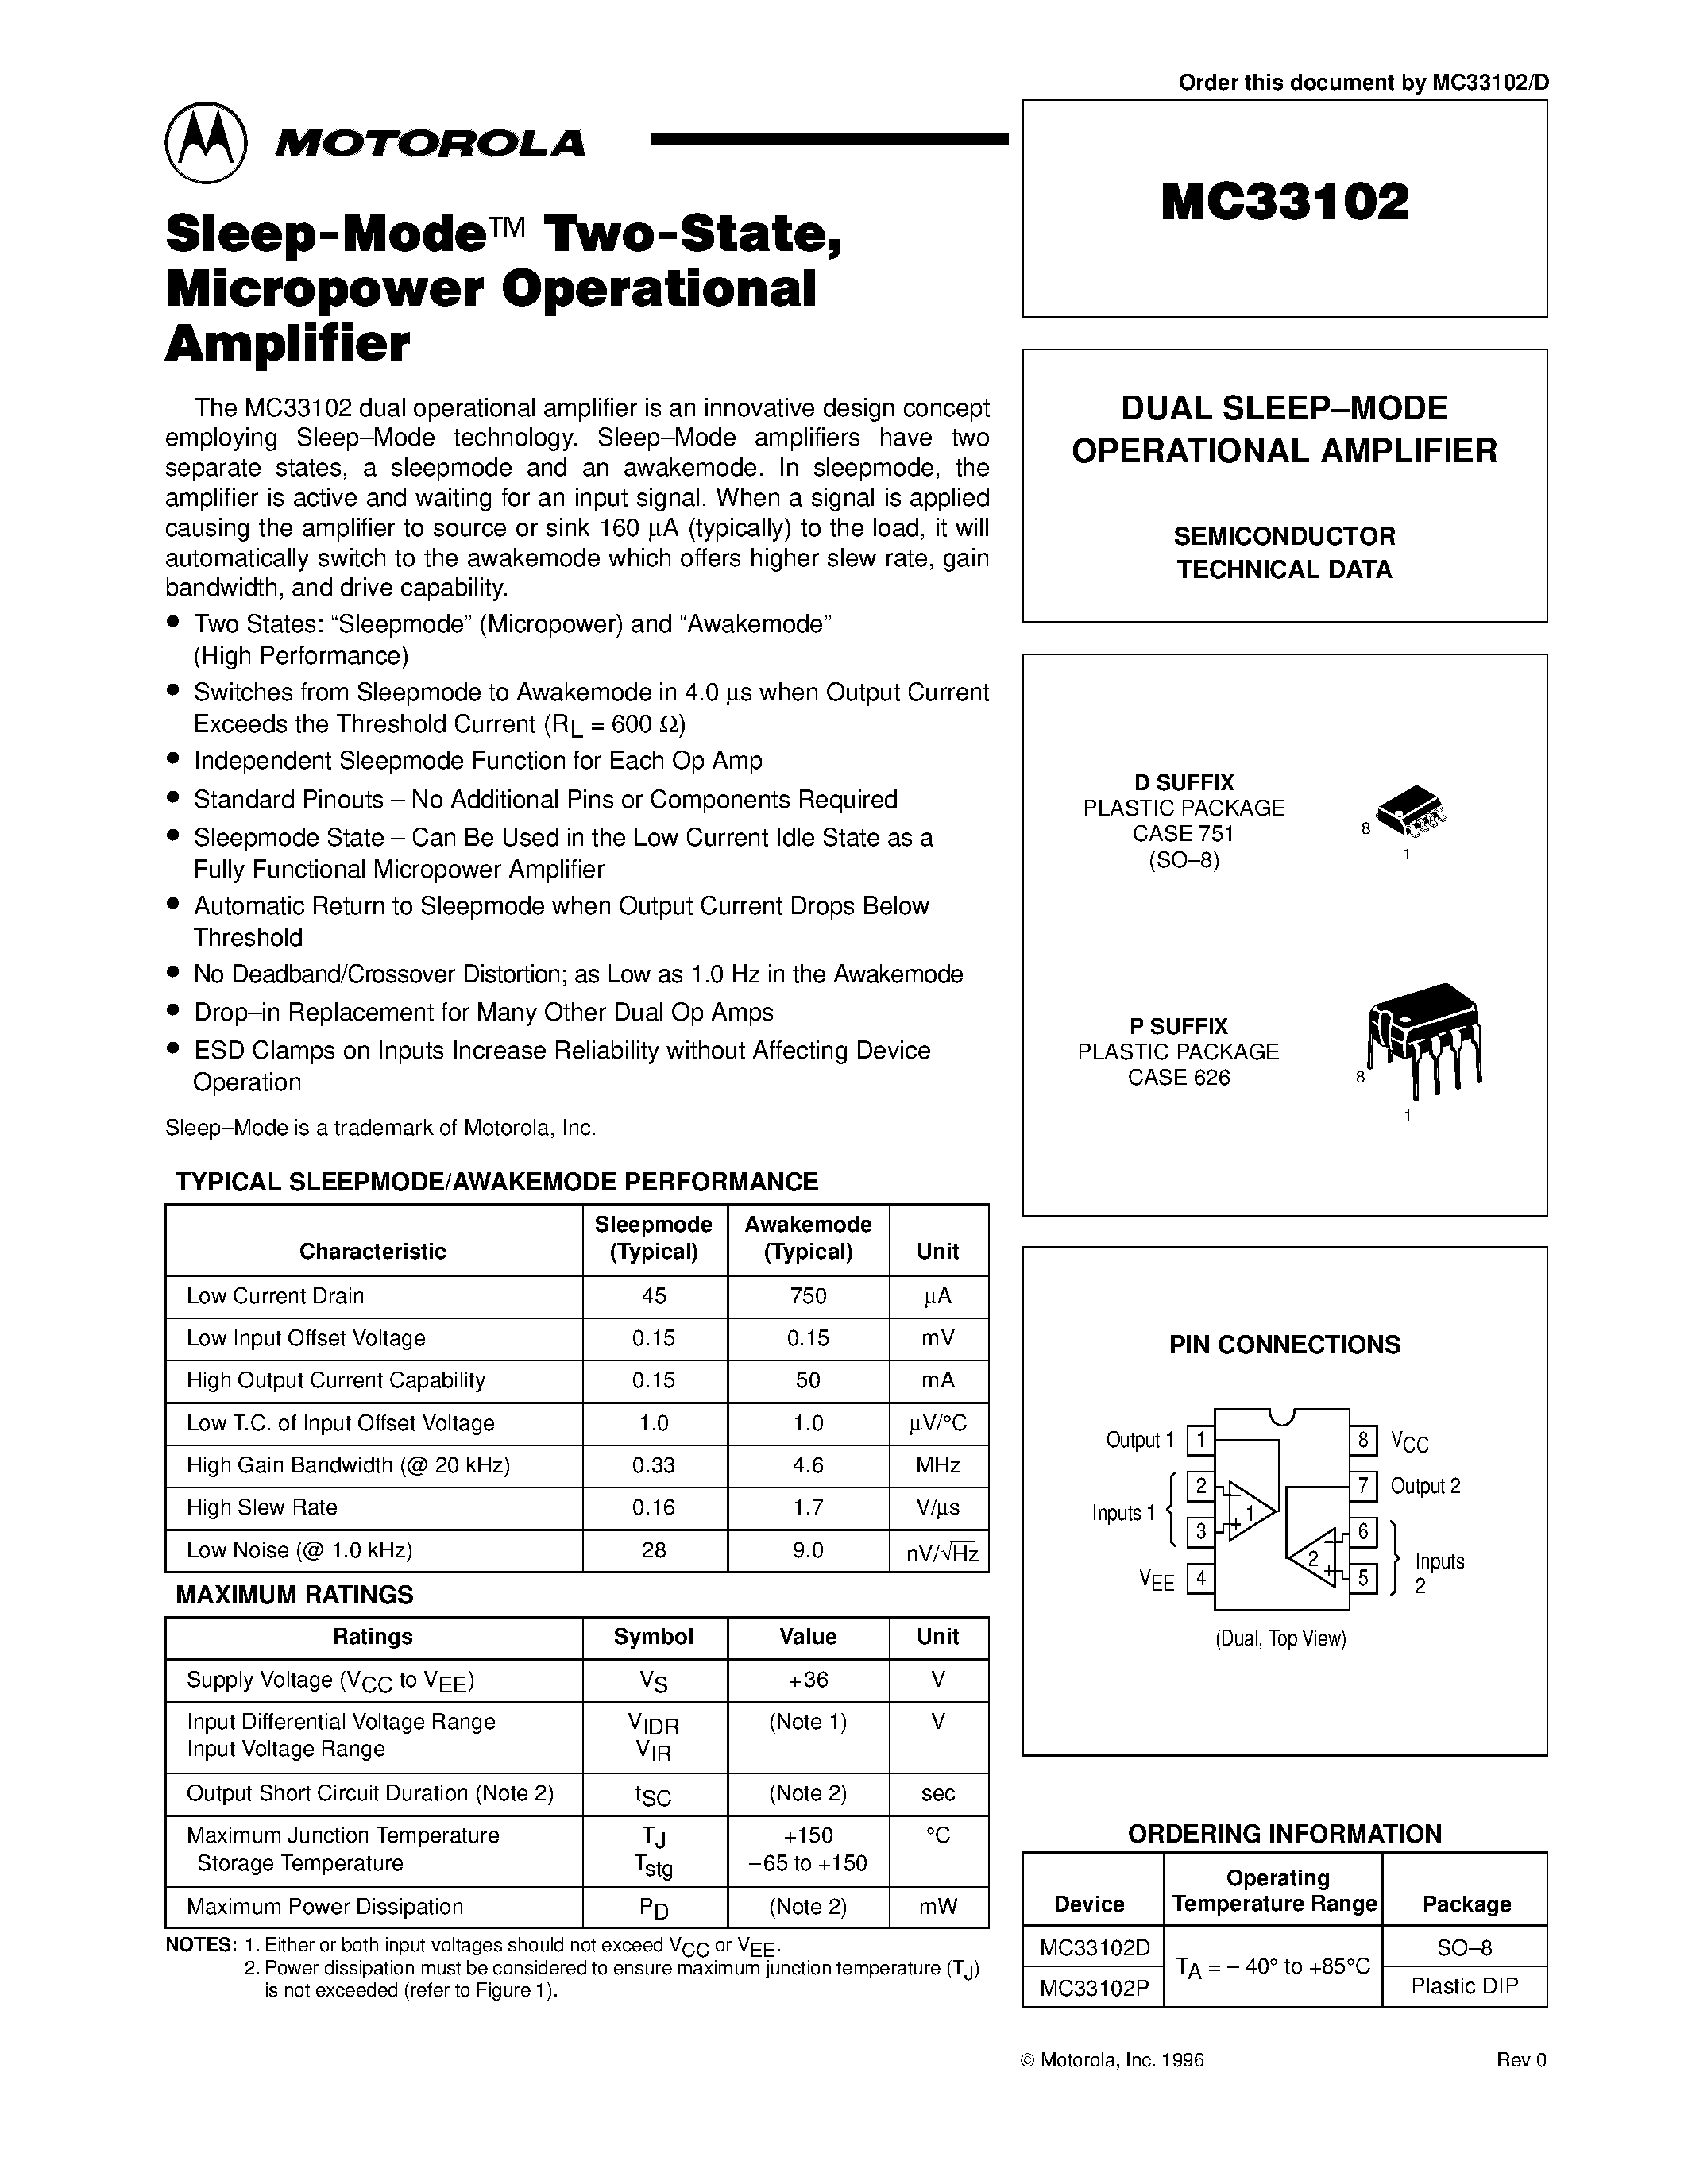 Даташит MC33102 - DUAL SLEEP-MODE OPERATIONAL AMPLIFIER страница 1